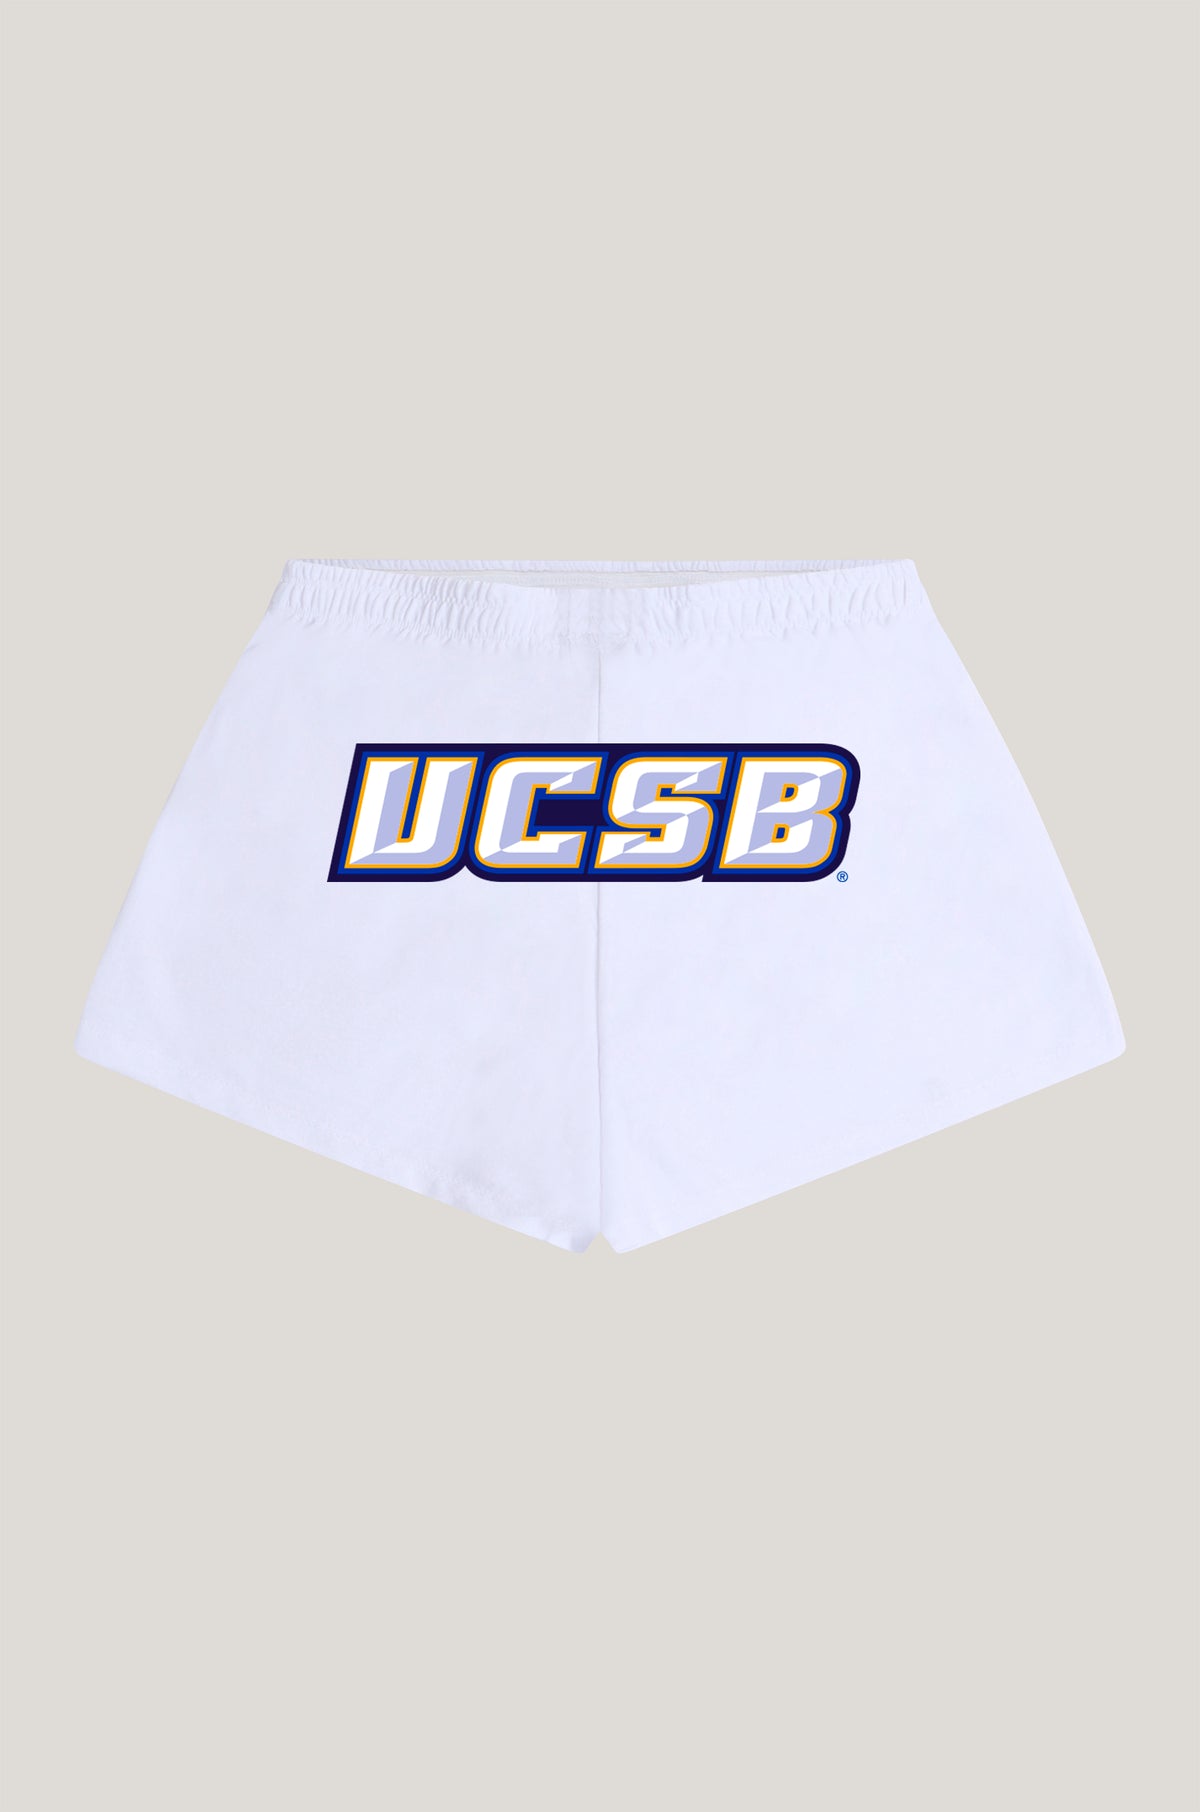 UCSB P.E. Shorts